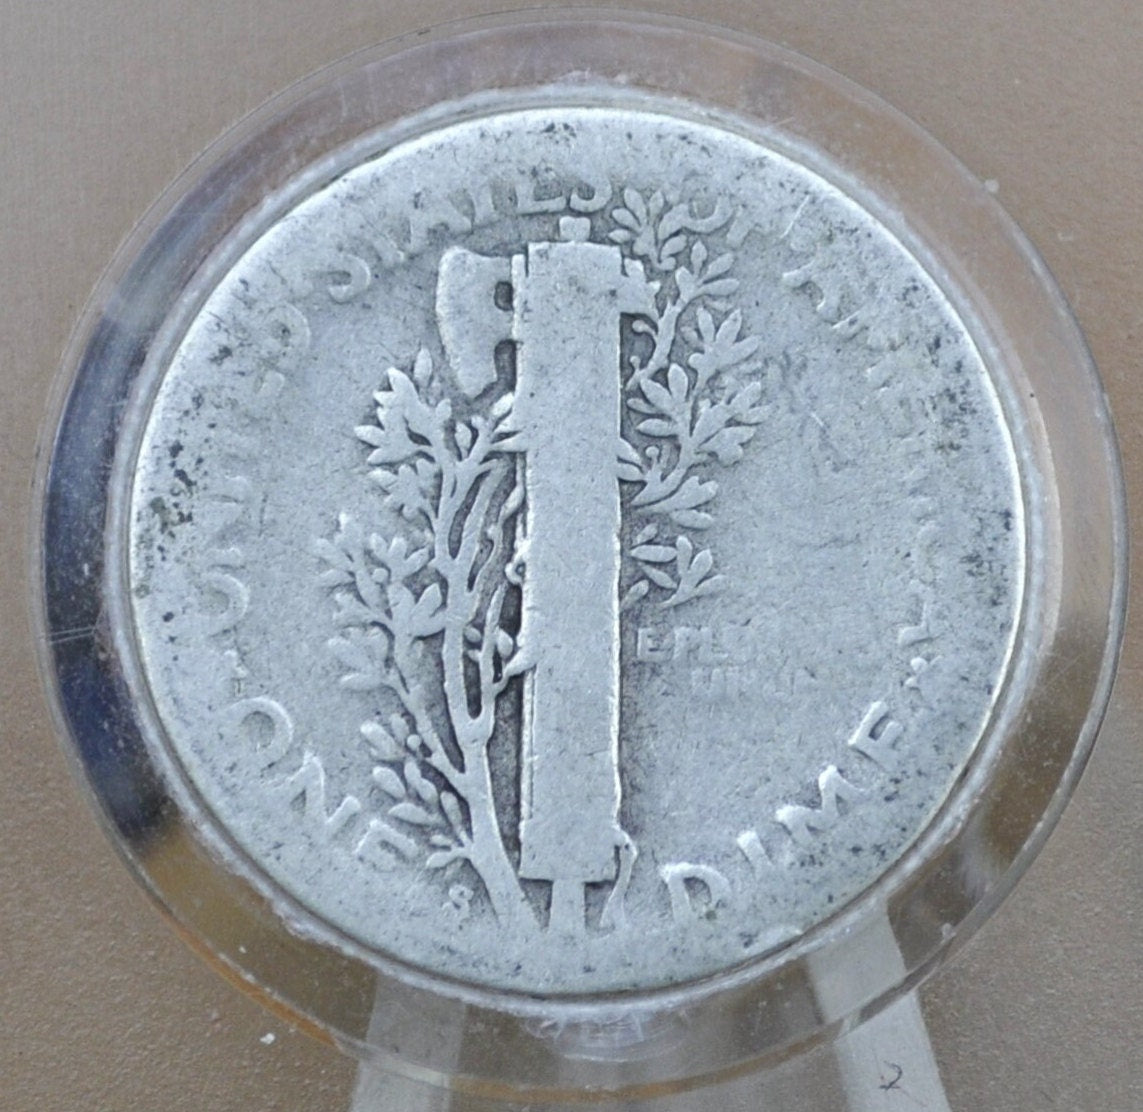 1928 S Mercury Silver Dime - Choose by Grade / Condition - San Francisco Mint - 1928 S Liberty Head Silver Dime